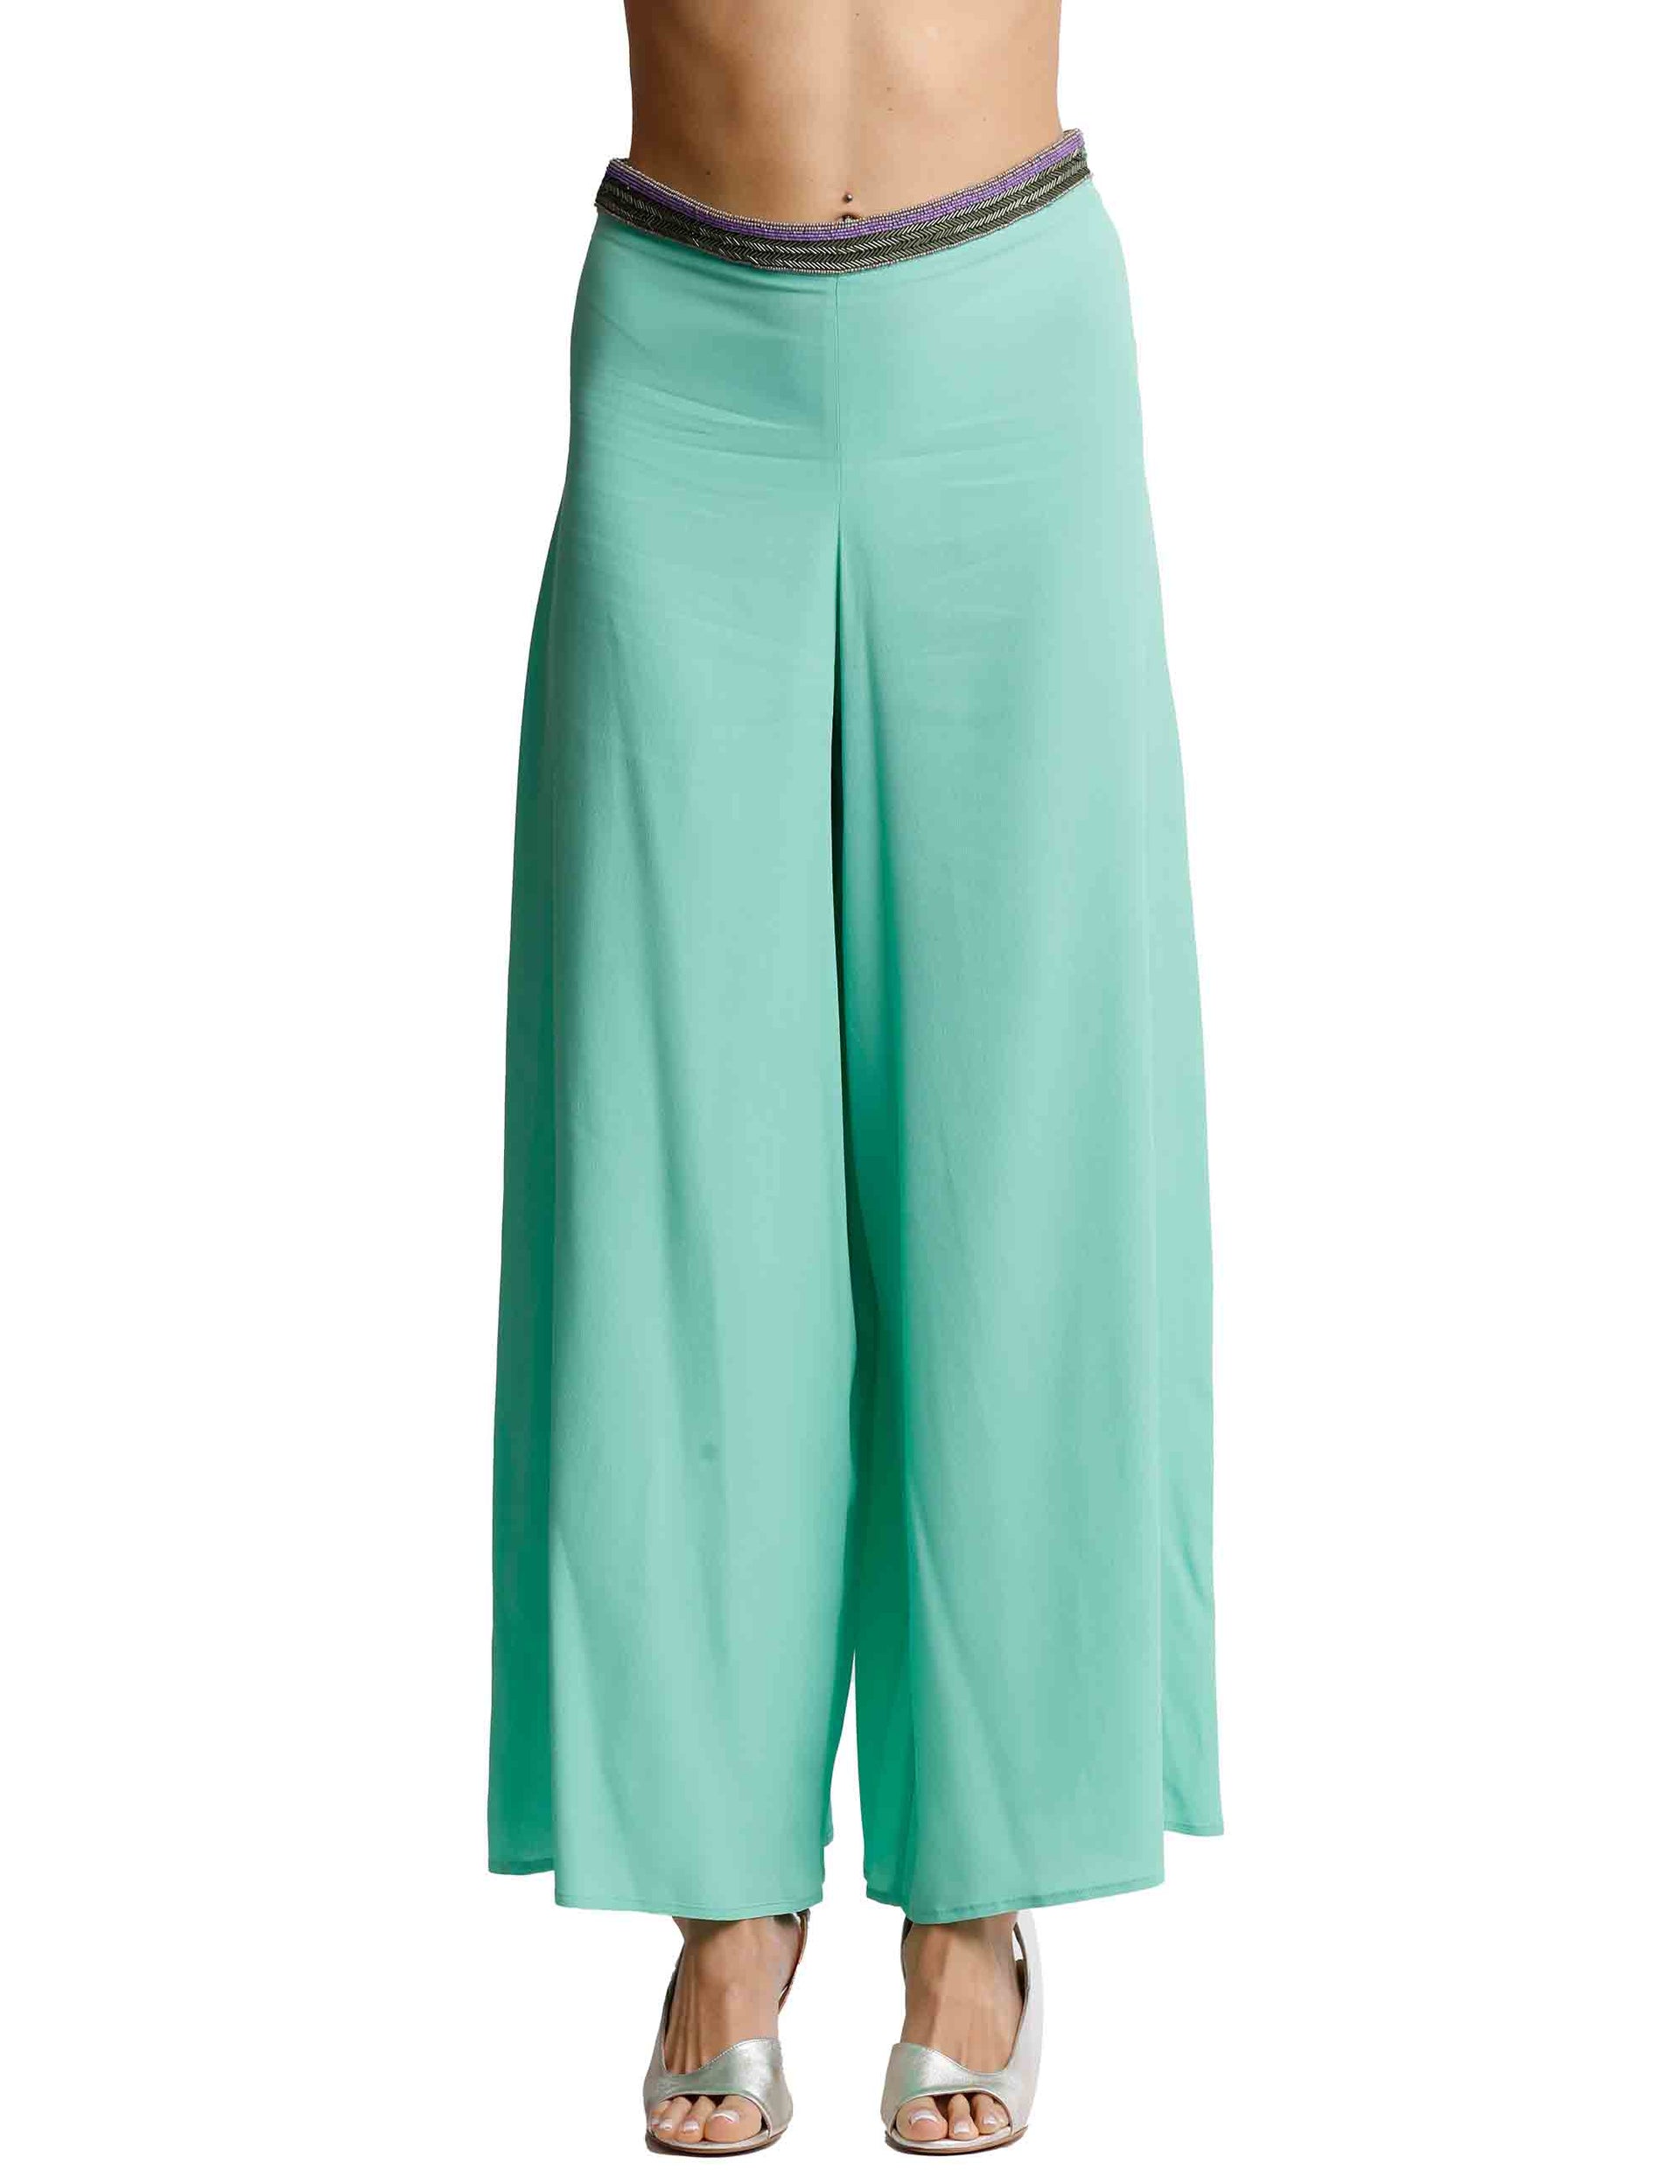 Pantaloni donna Fluide Crepe in seta verde con cintura ricamata